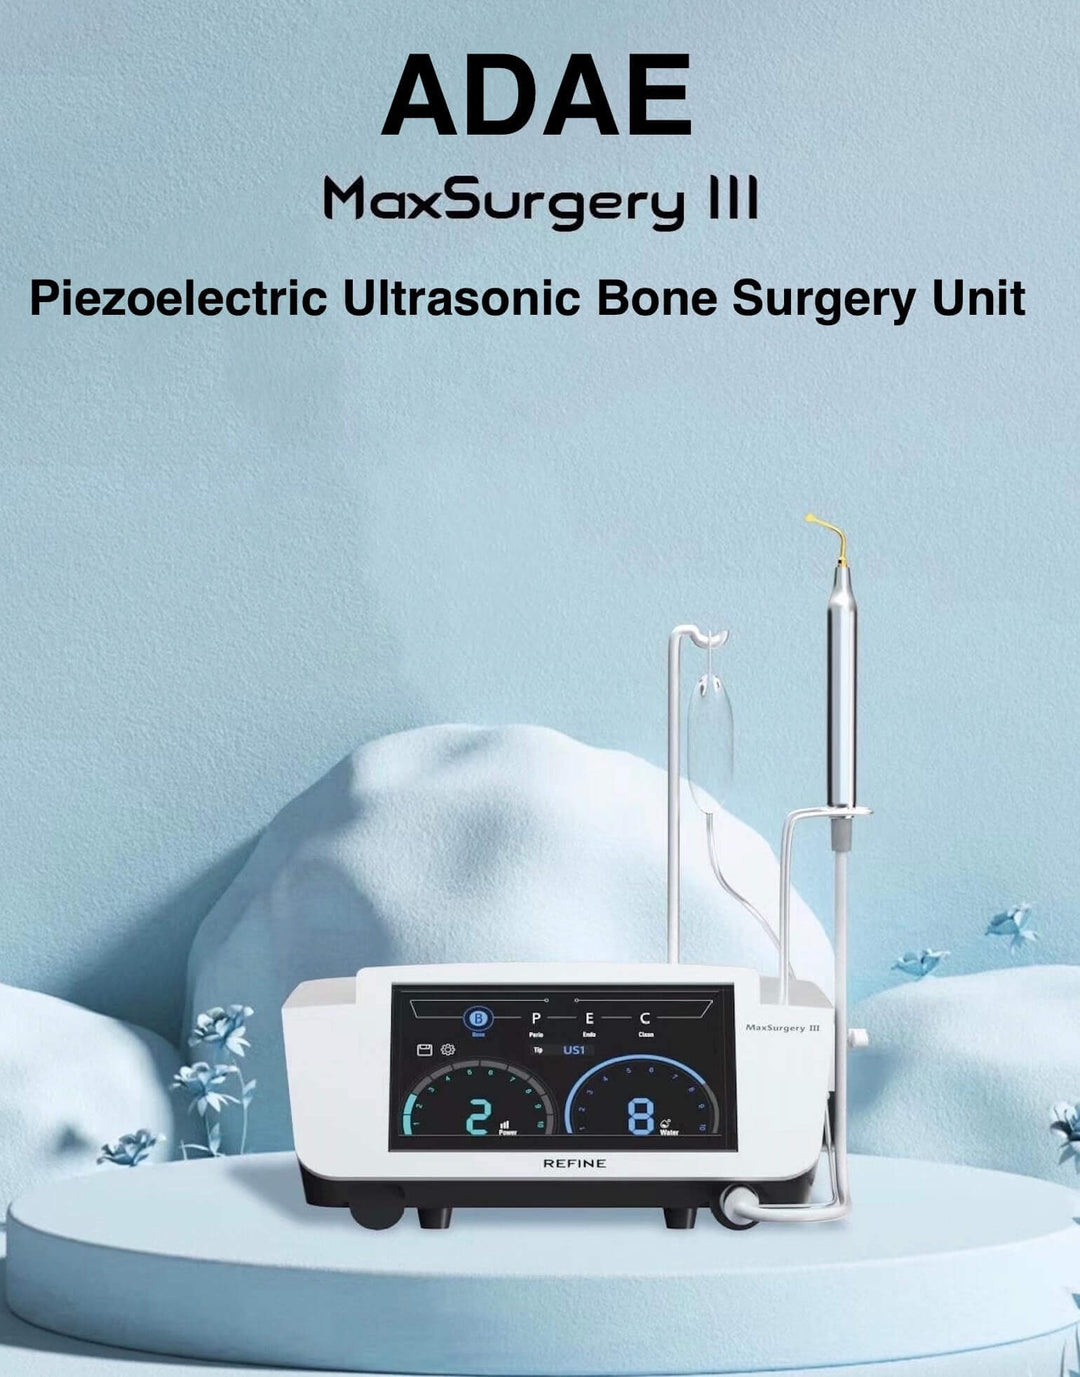 ADAE refine MaxSurgery III Piezoelectric ultrasonic bone surgery unit